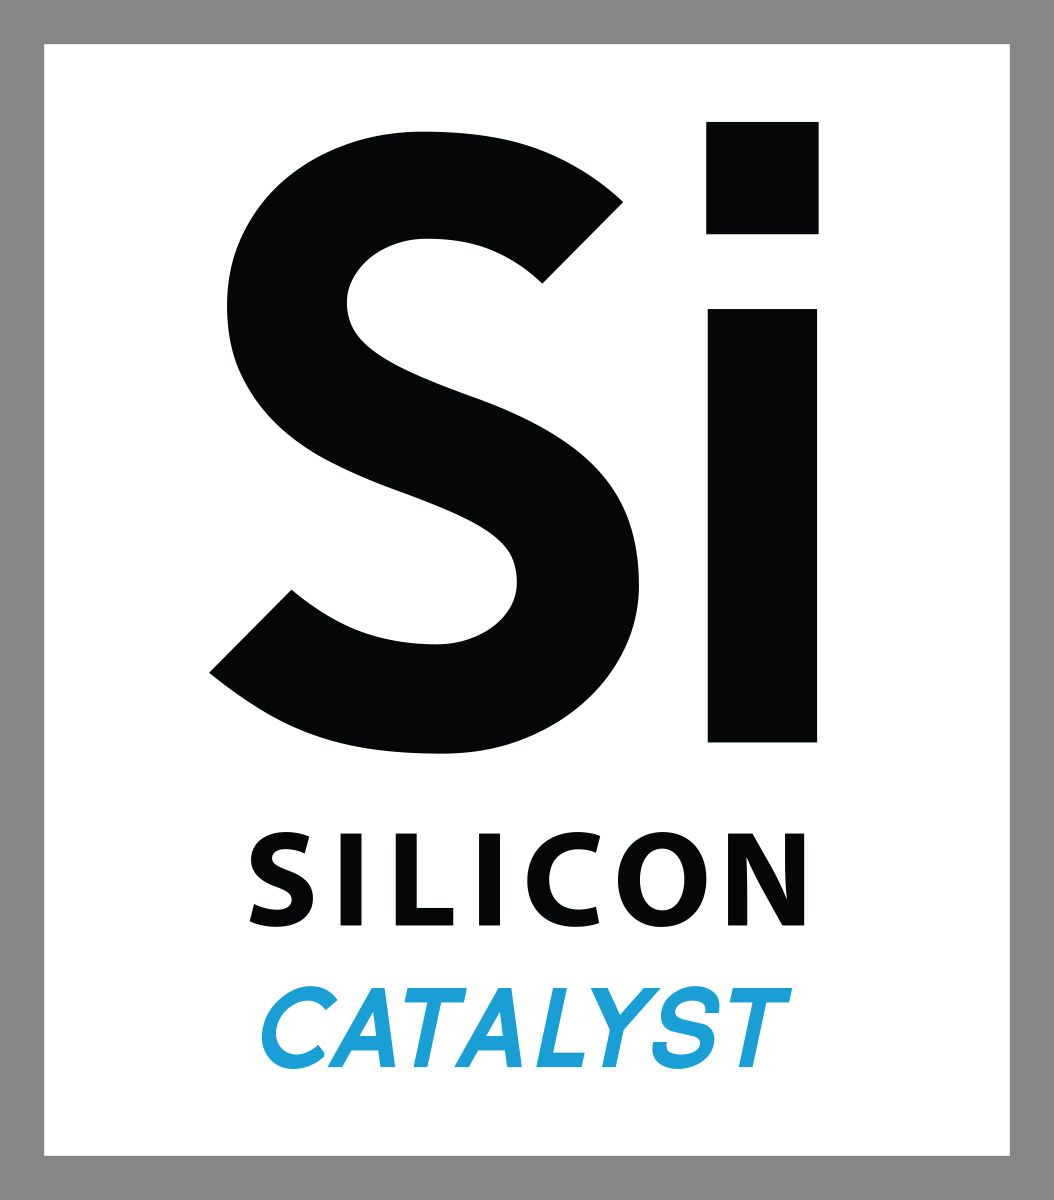 The Silicon Catalyst logo.